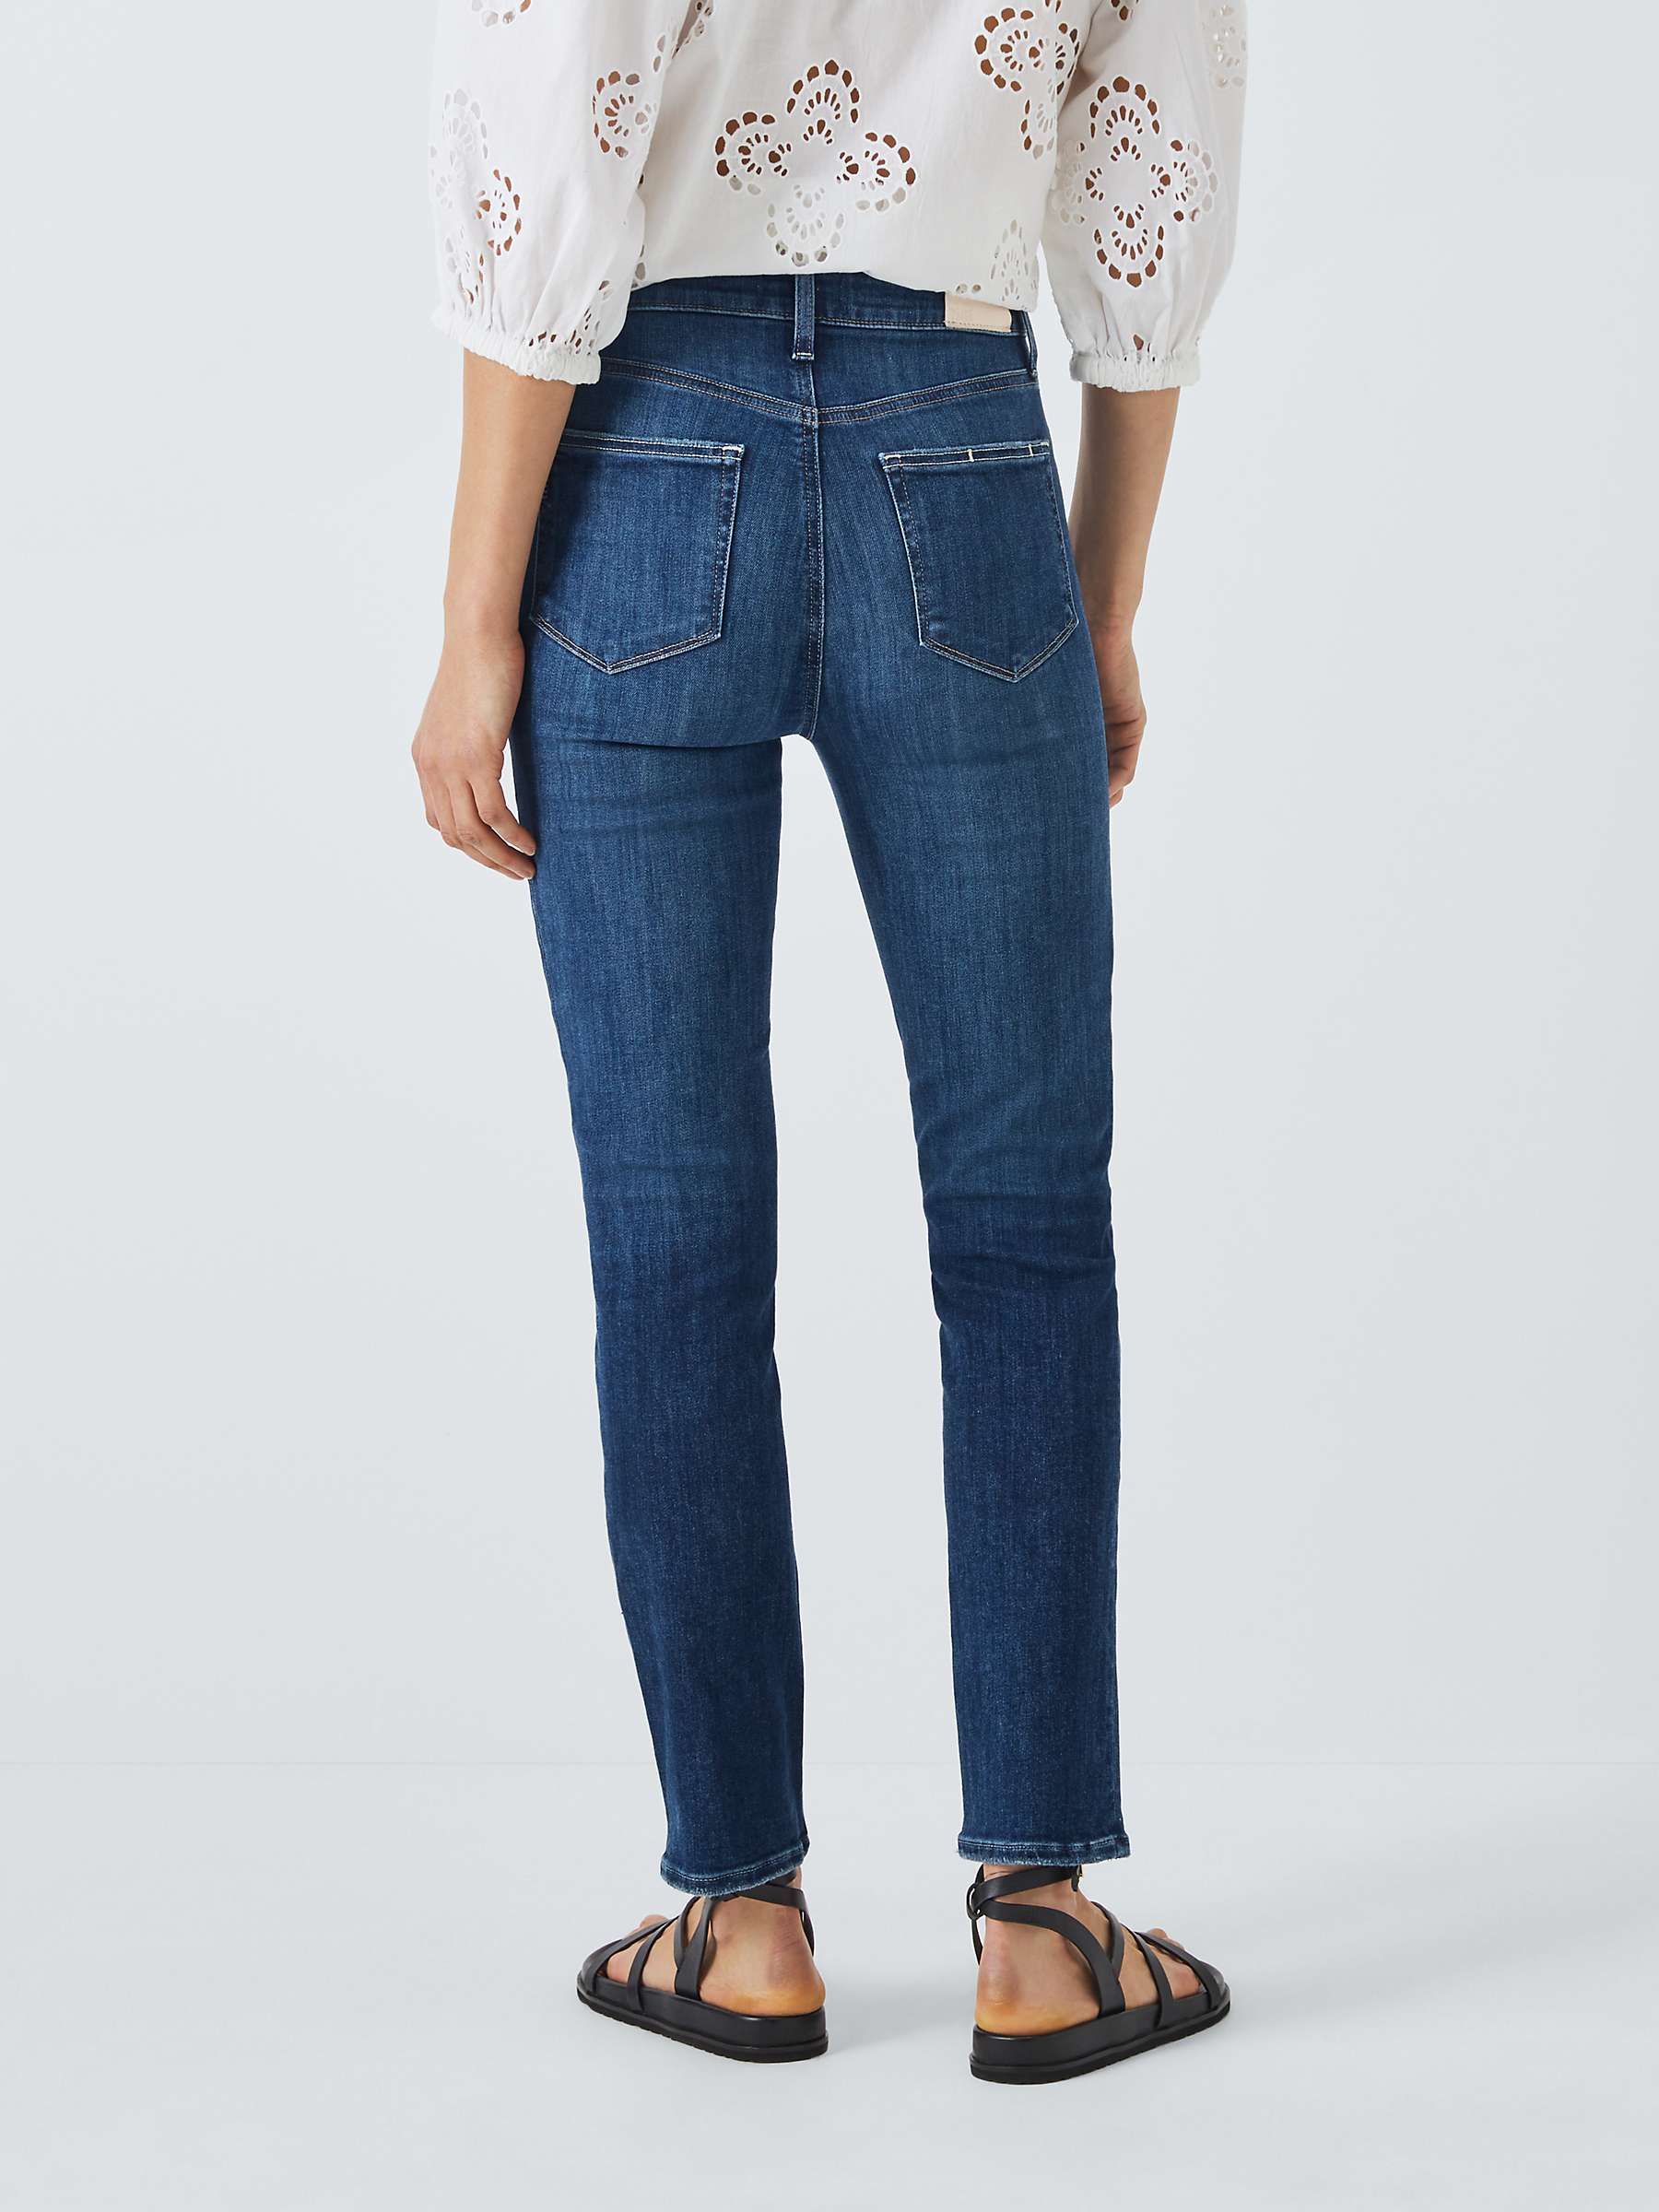 Buy PAIGE Gemma Cigarette Jeans, Breakthrough Online at johnlewis.com